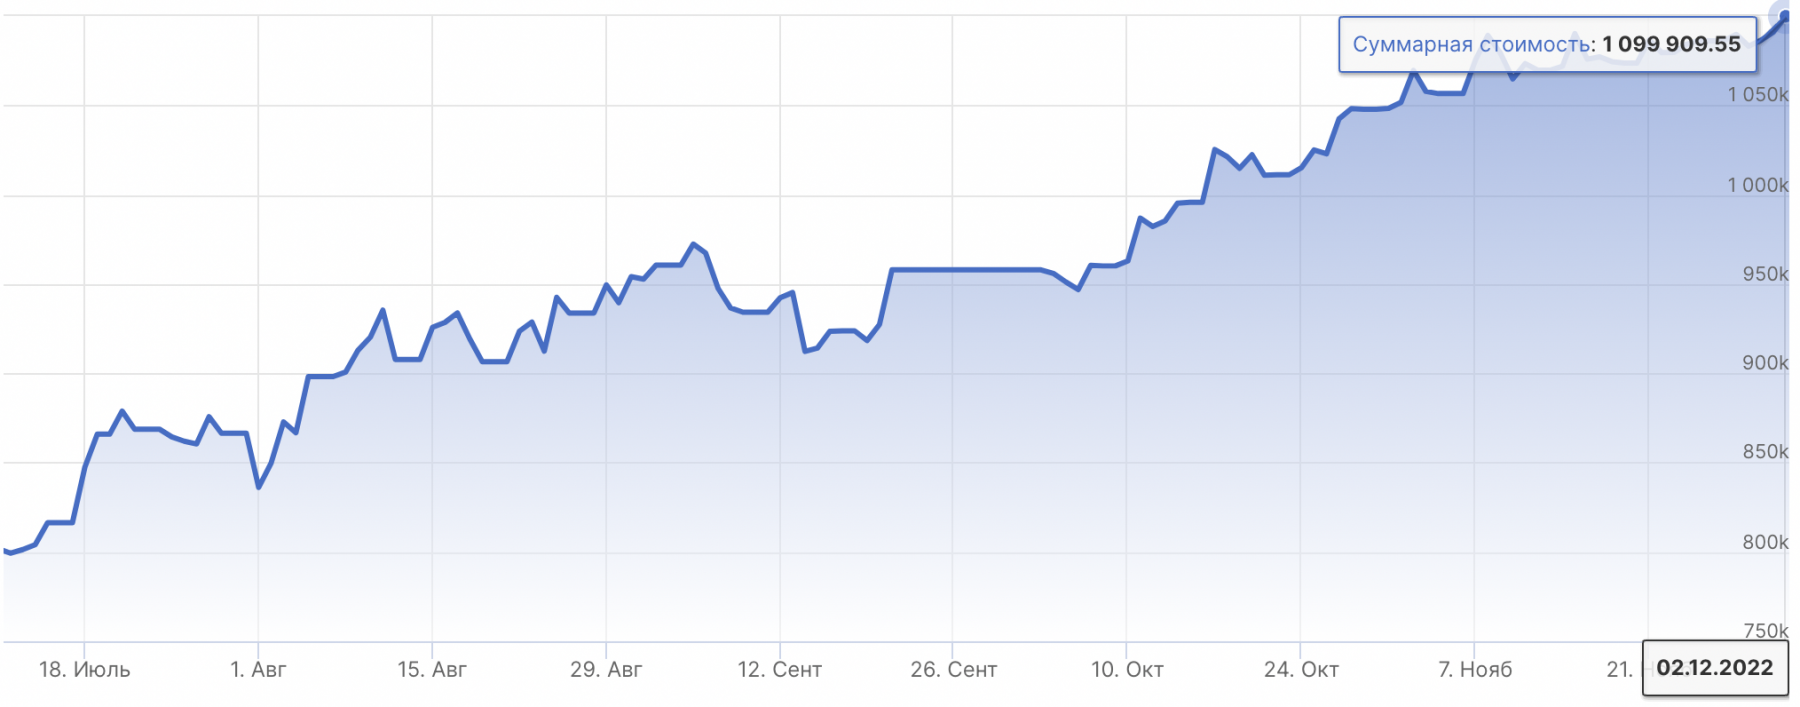 Итоги недели на рынке акций РФ: +13 265 руб.